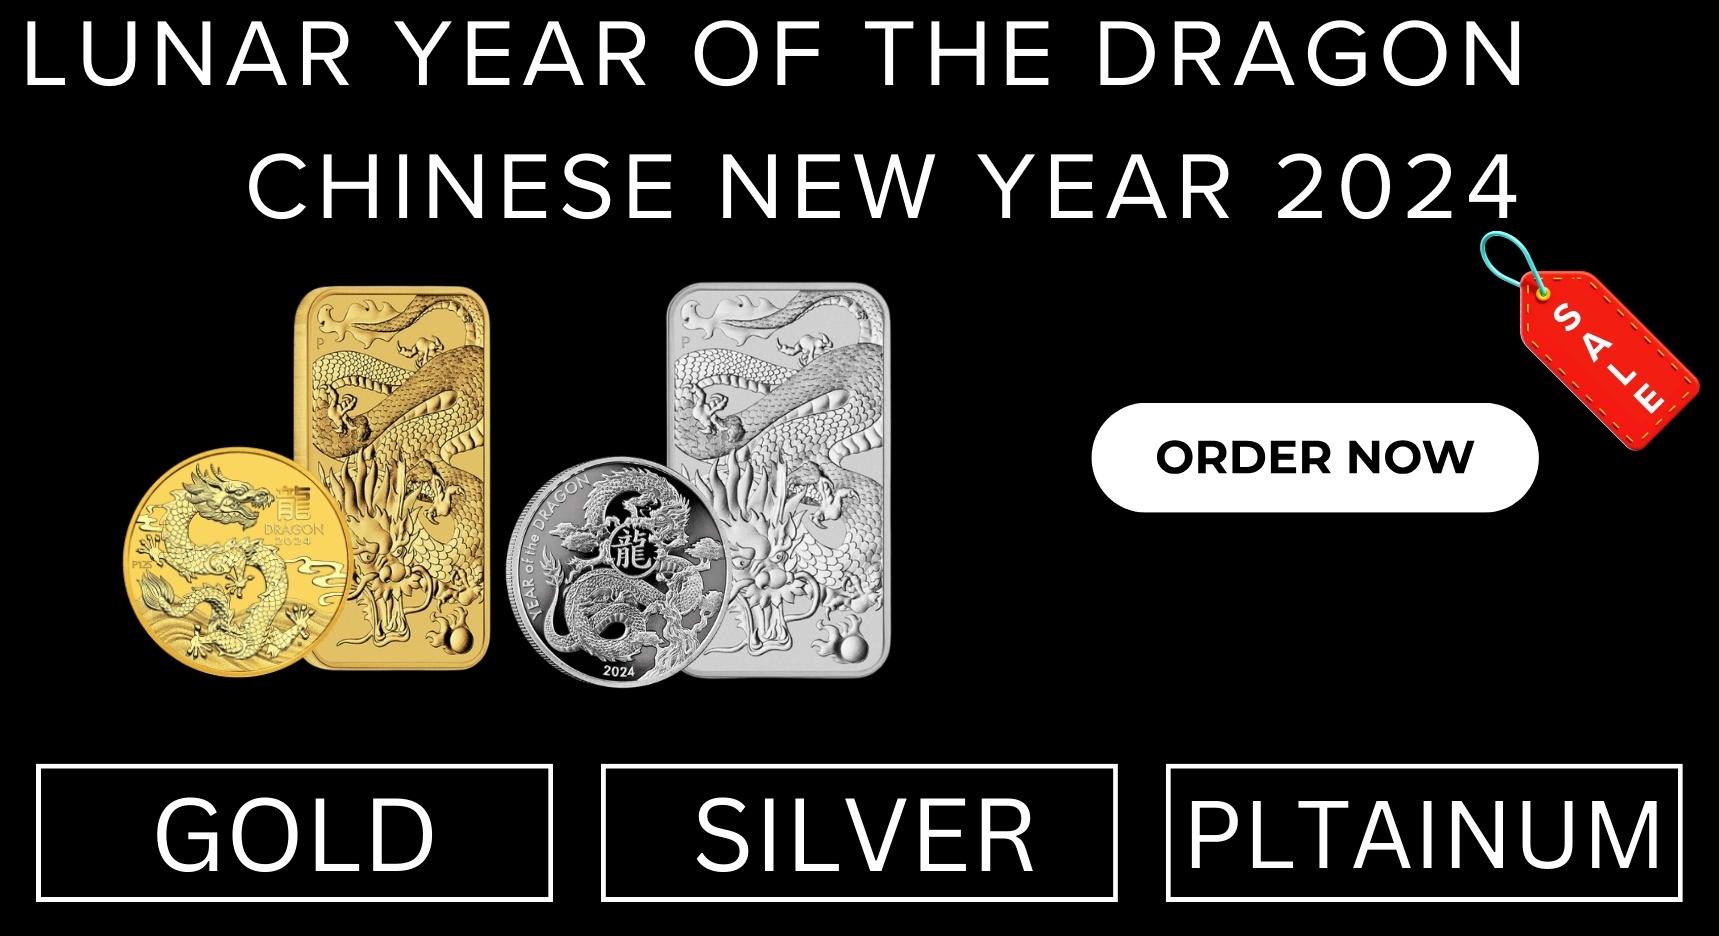 Chinese dragon gold bars